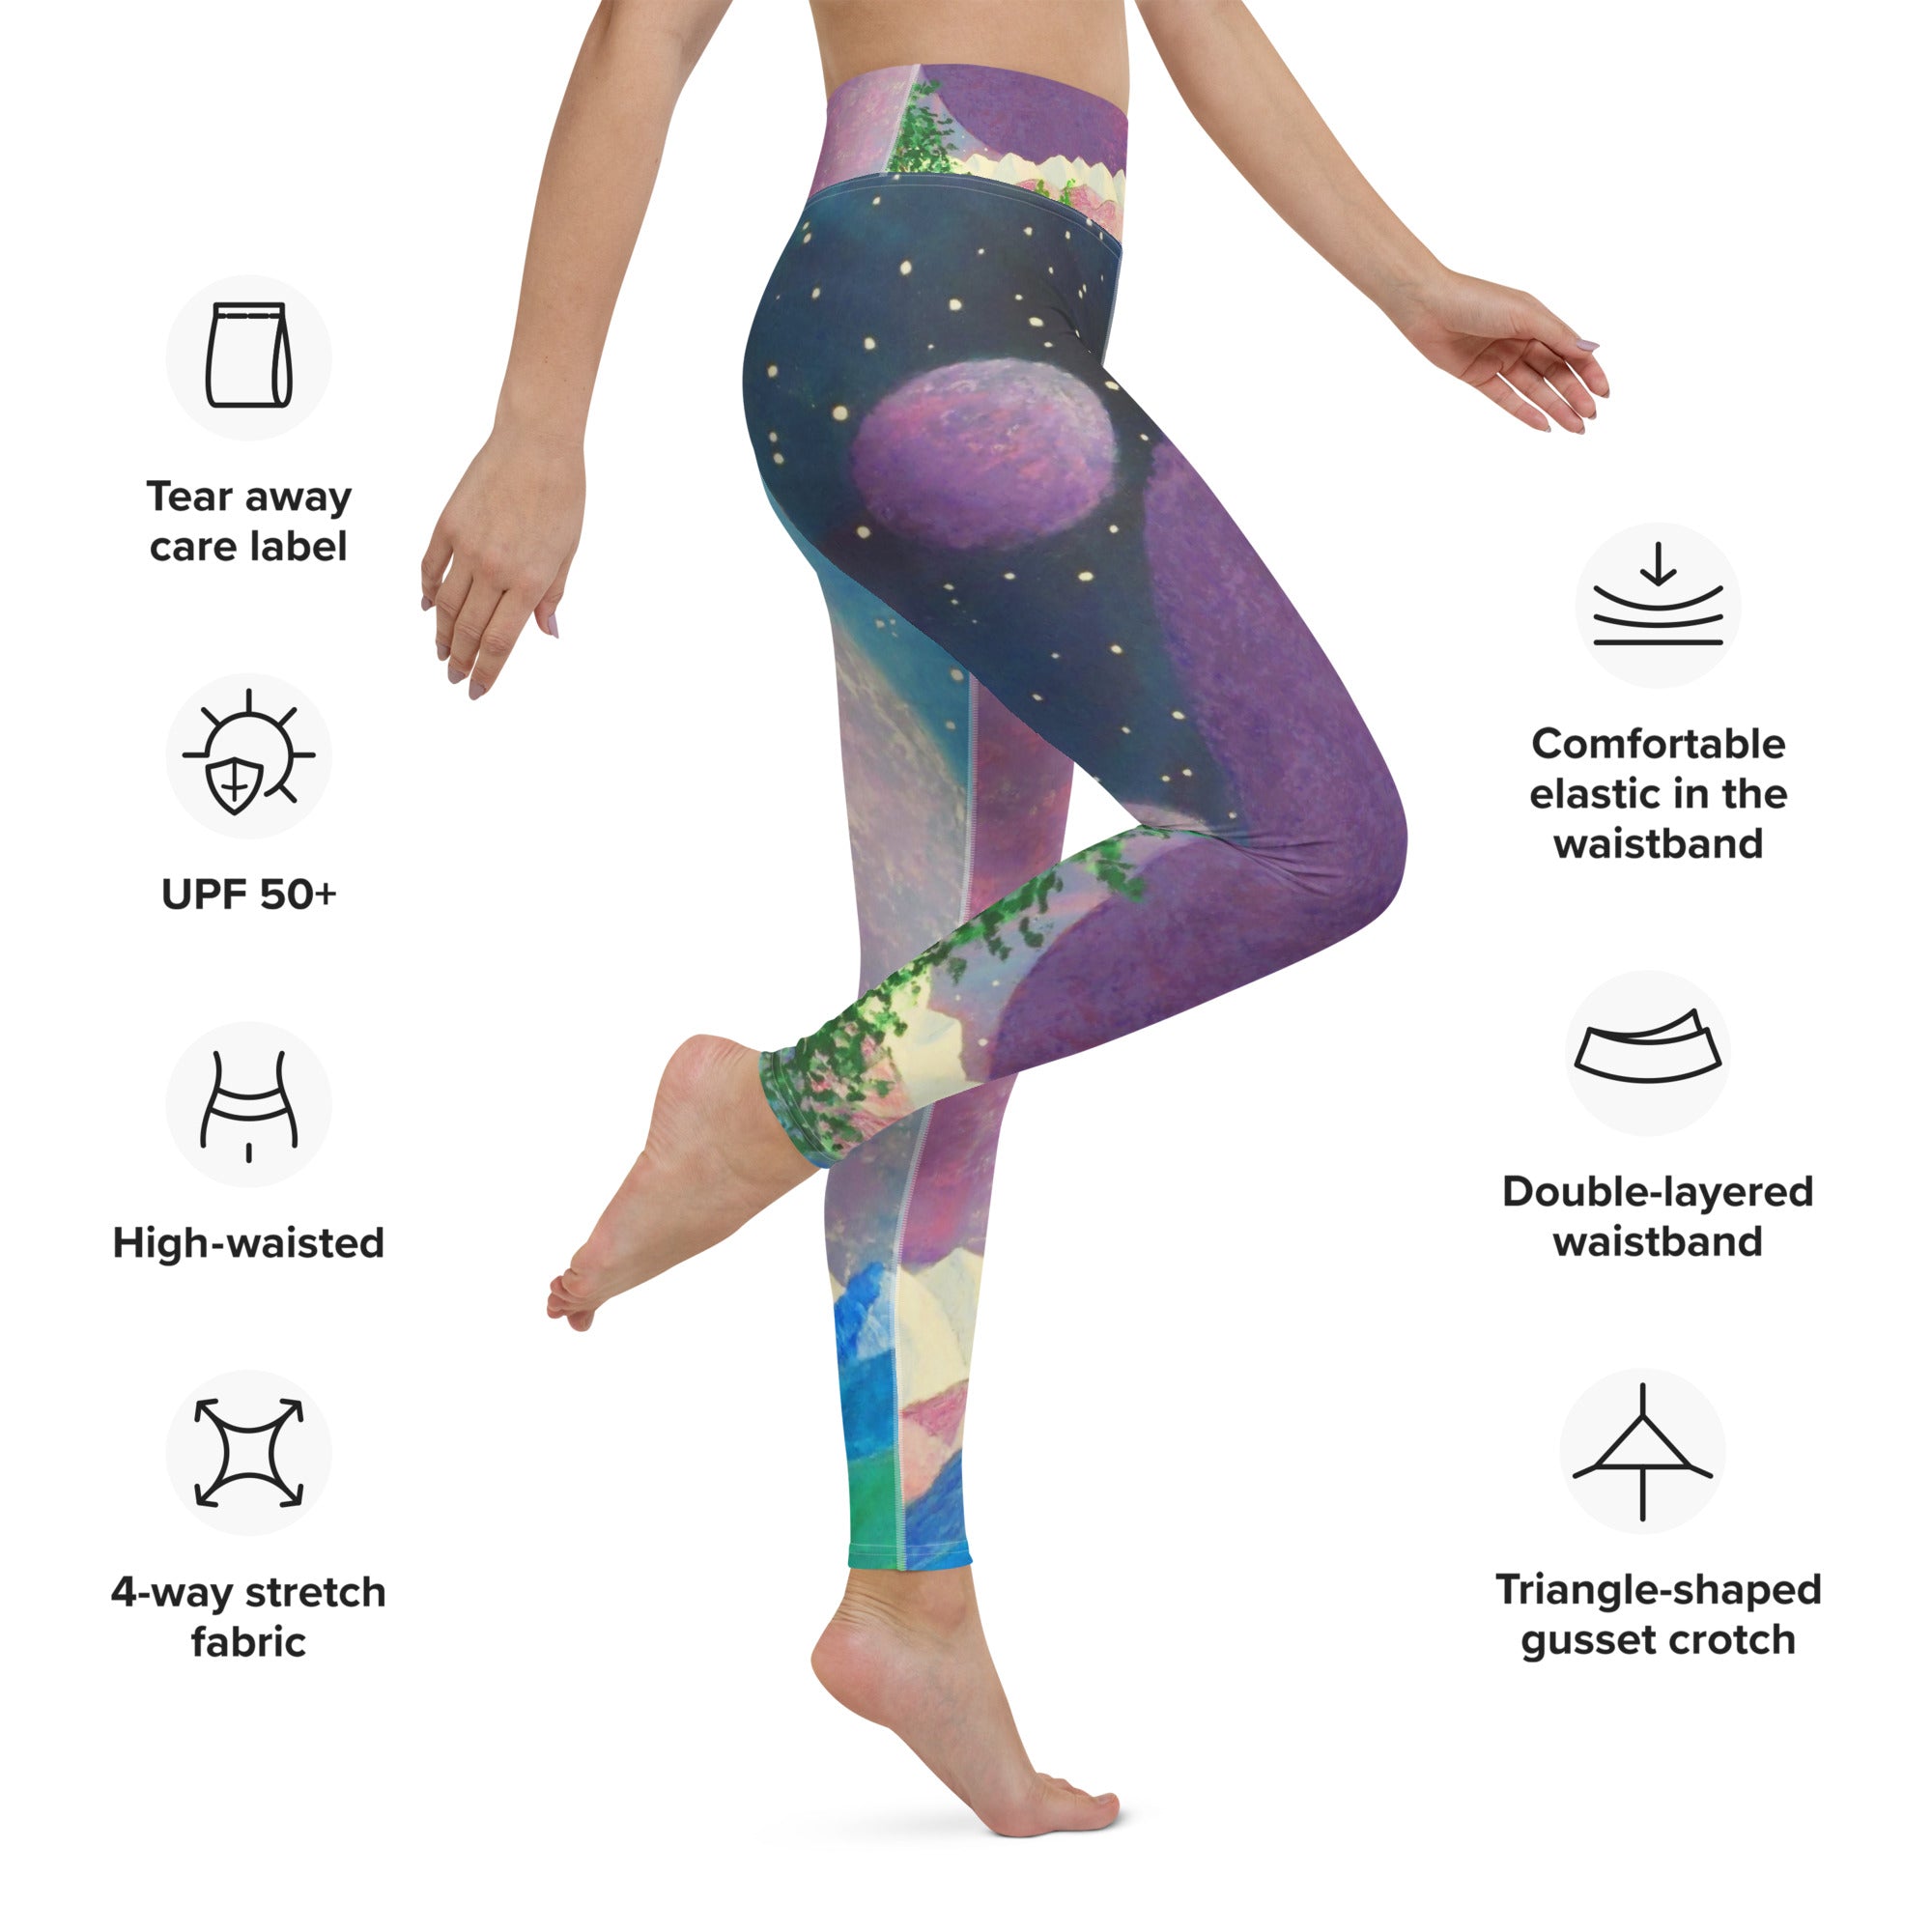 Purple Rogues High-Waisted Yoga Leggings